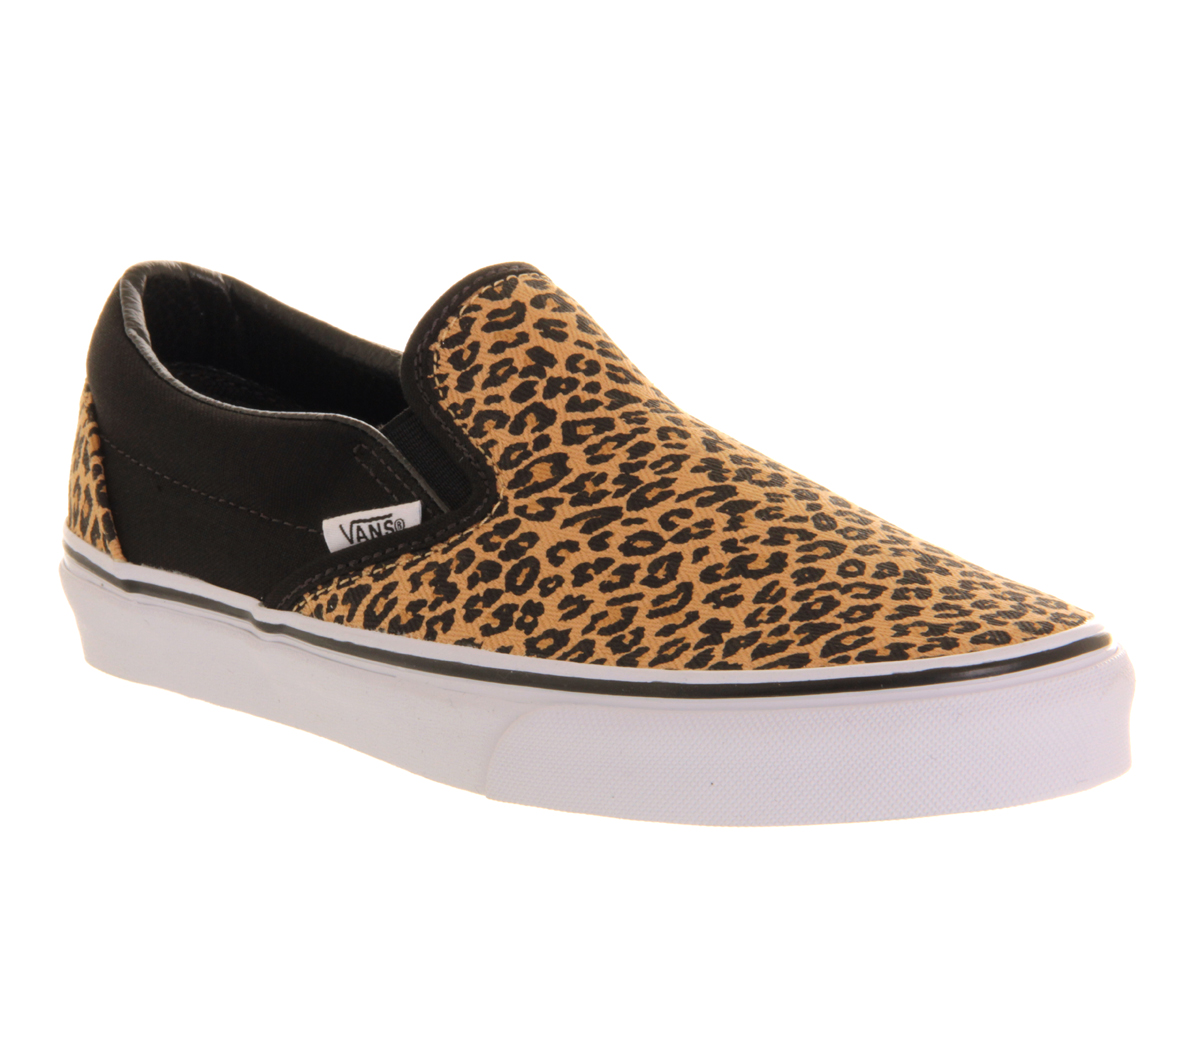 vans asher dx women's skate shoes cheetah